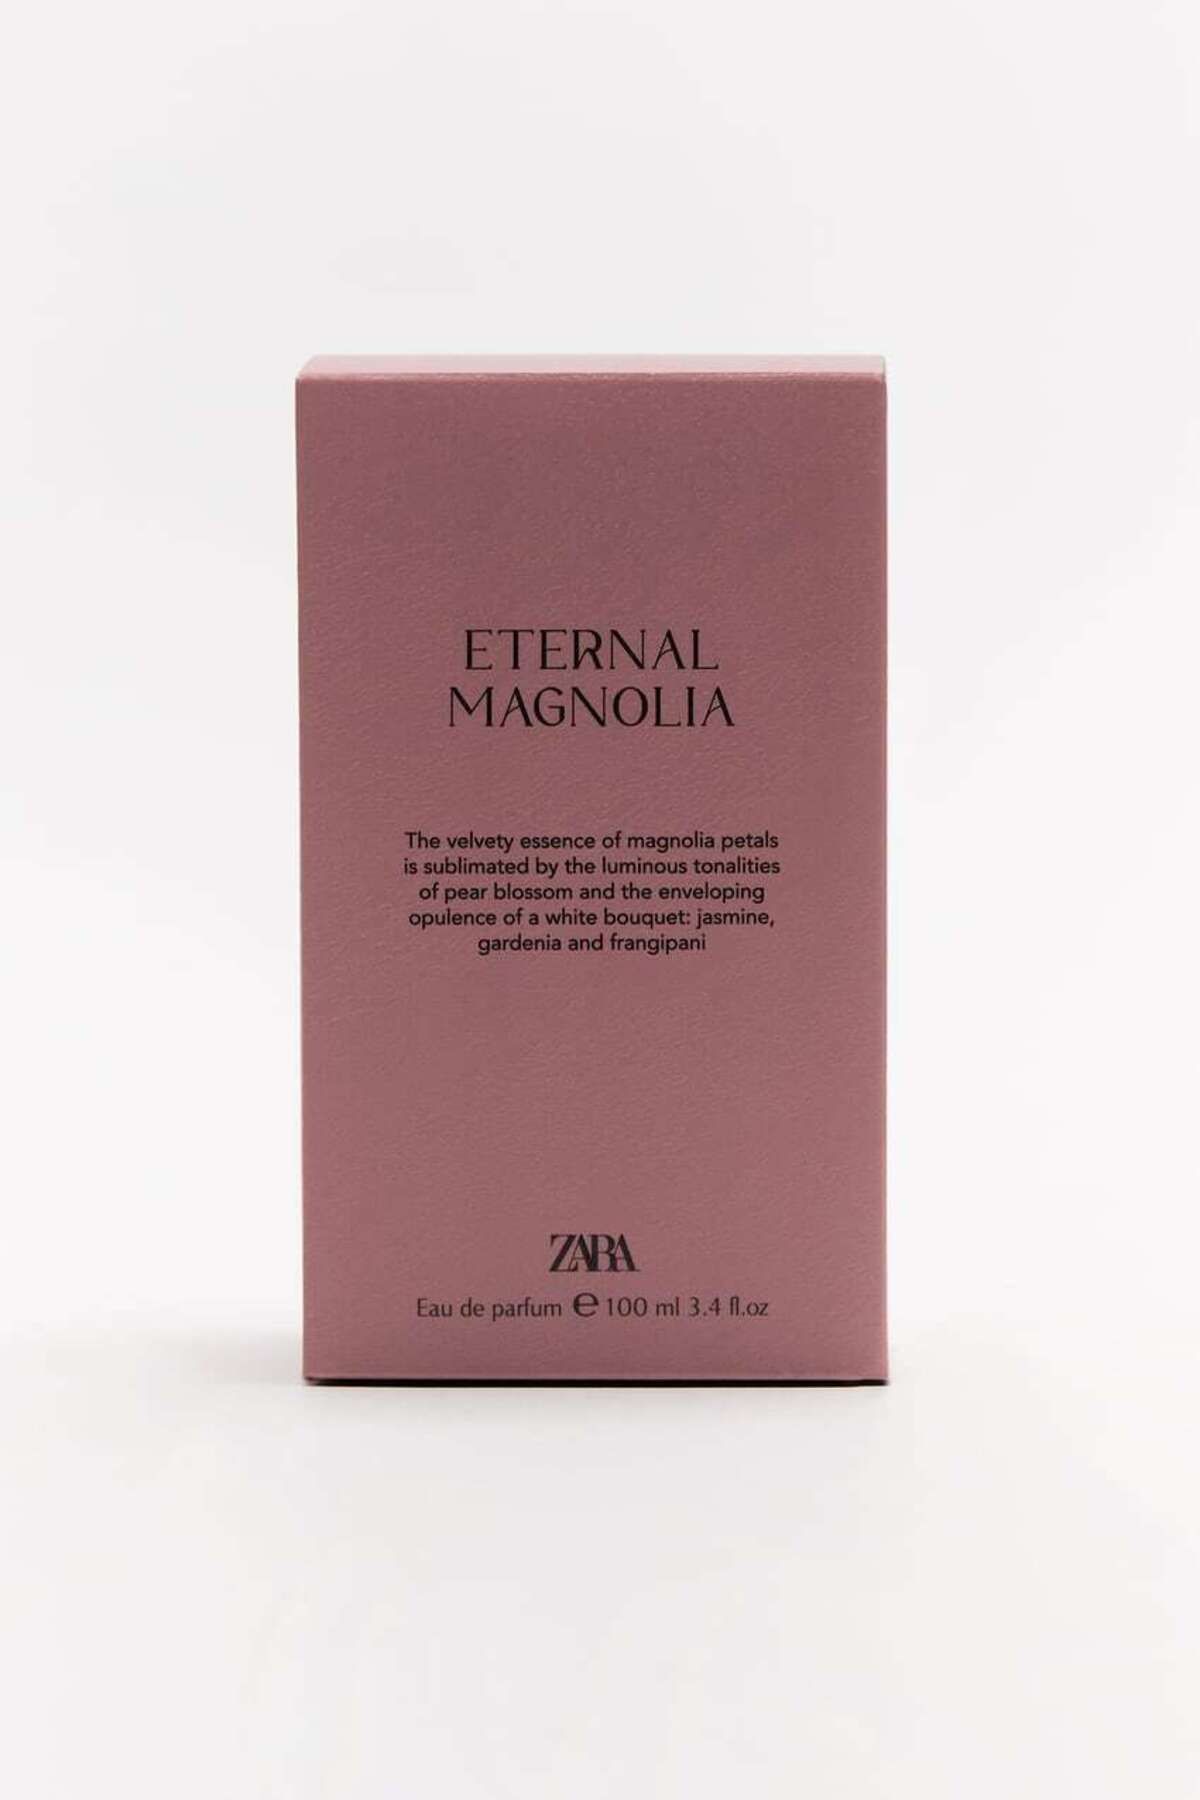 Zara Eternal Magnolia Edp 100 ml (3.4 FL. OZ). Ins20130202999995em